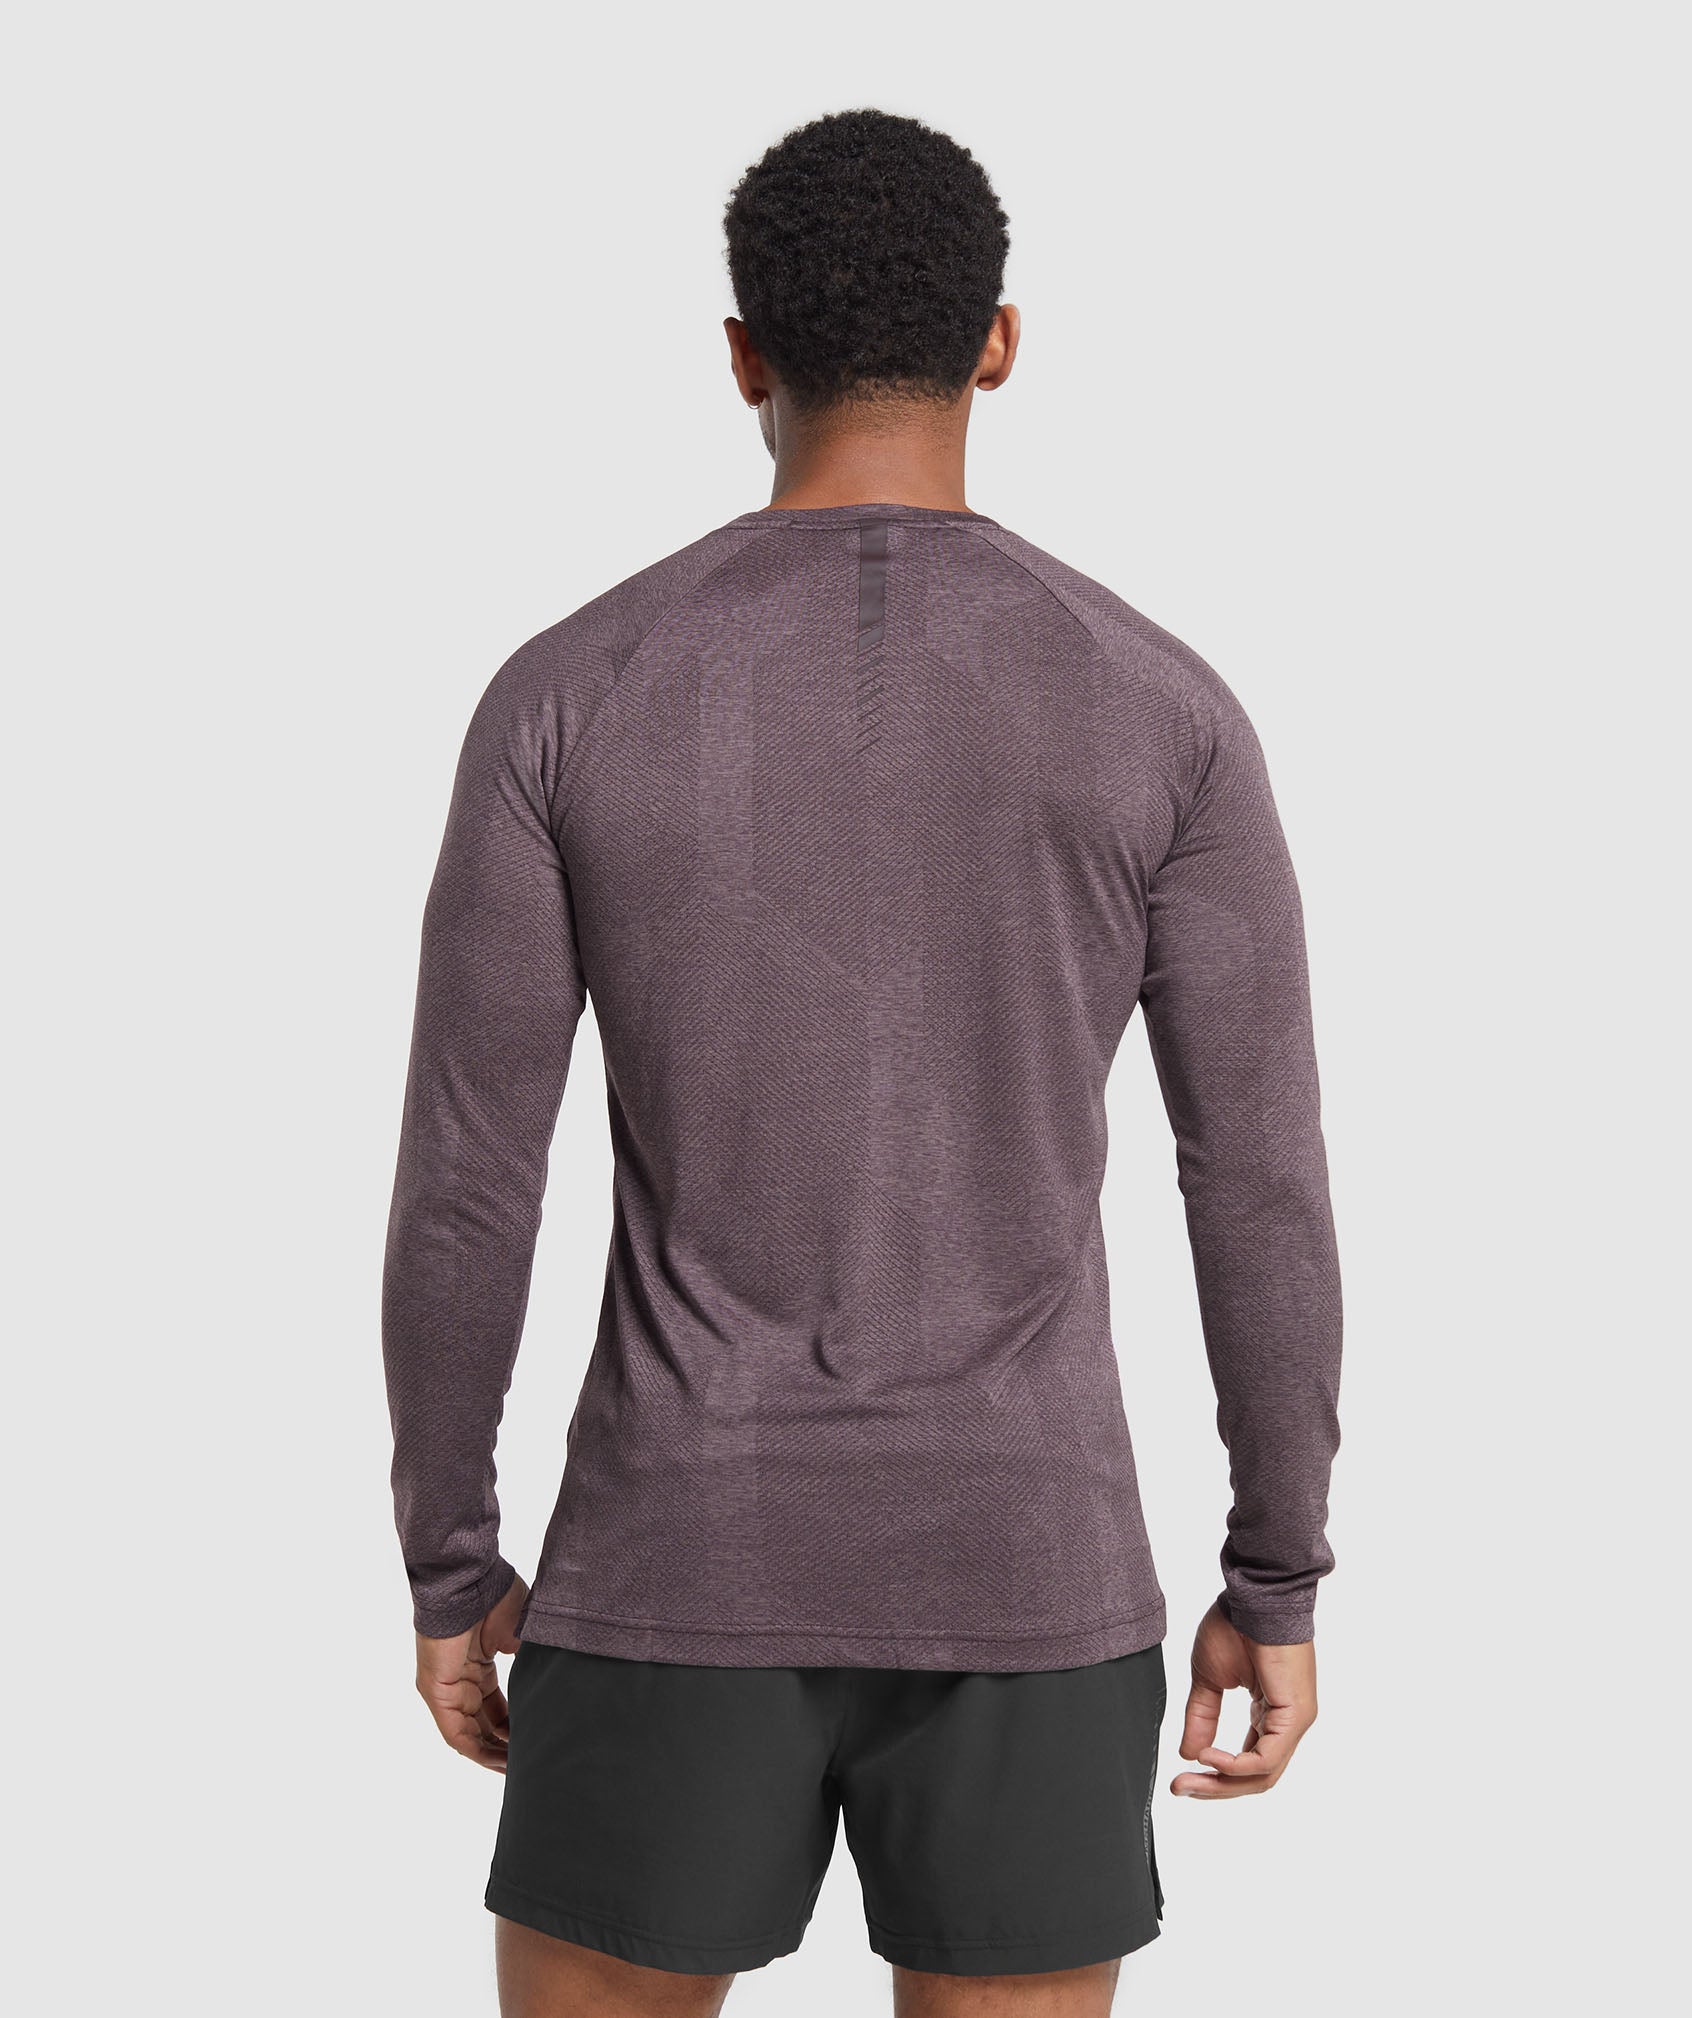 Apex Long Sleeve T-Shirt in Plum Brown/Walnut Mauve - view 2